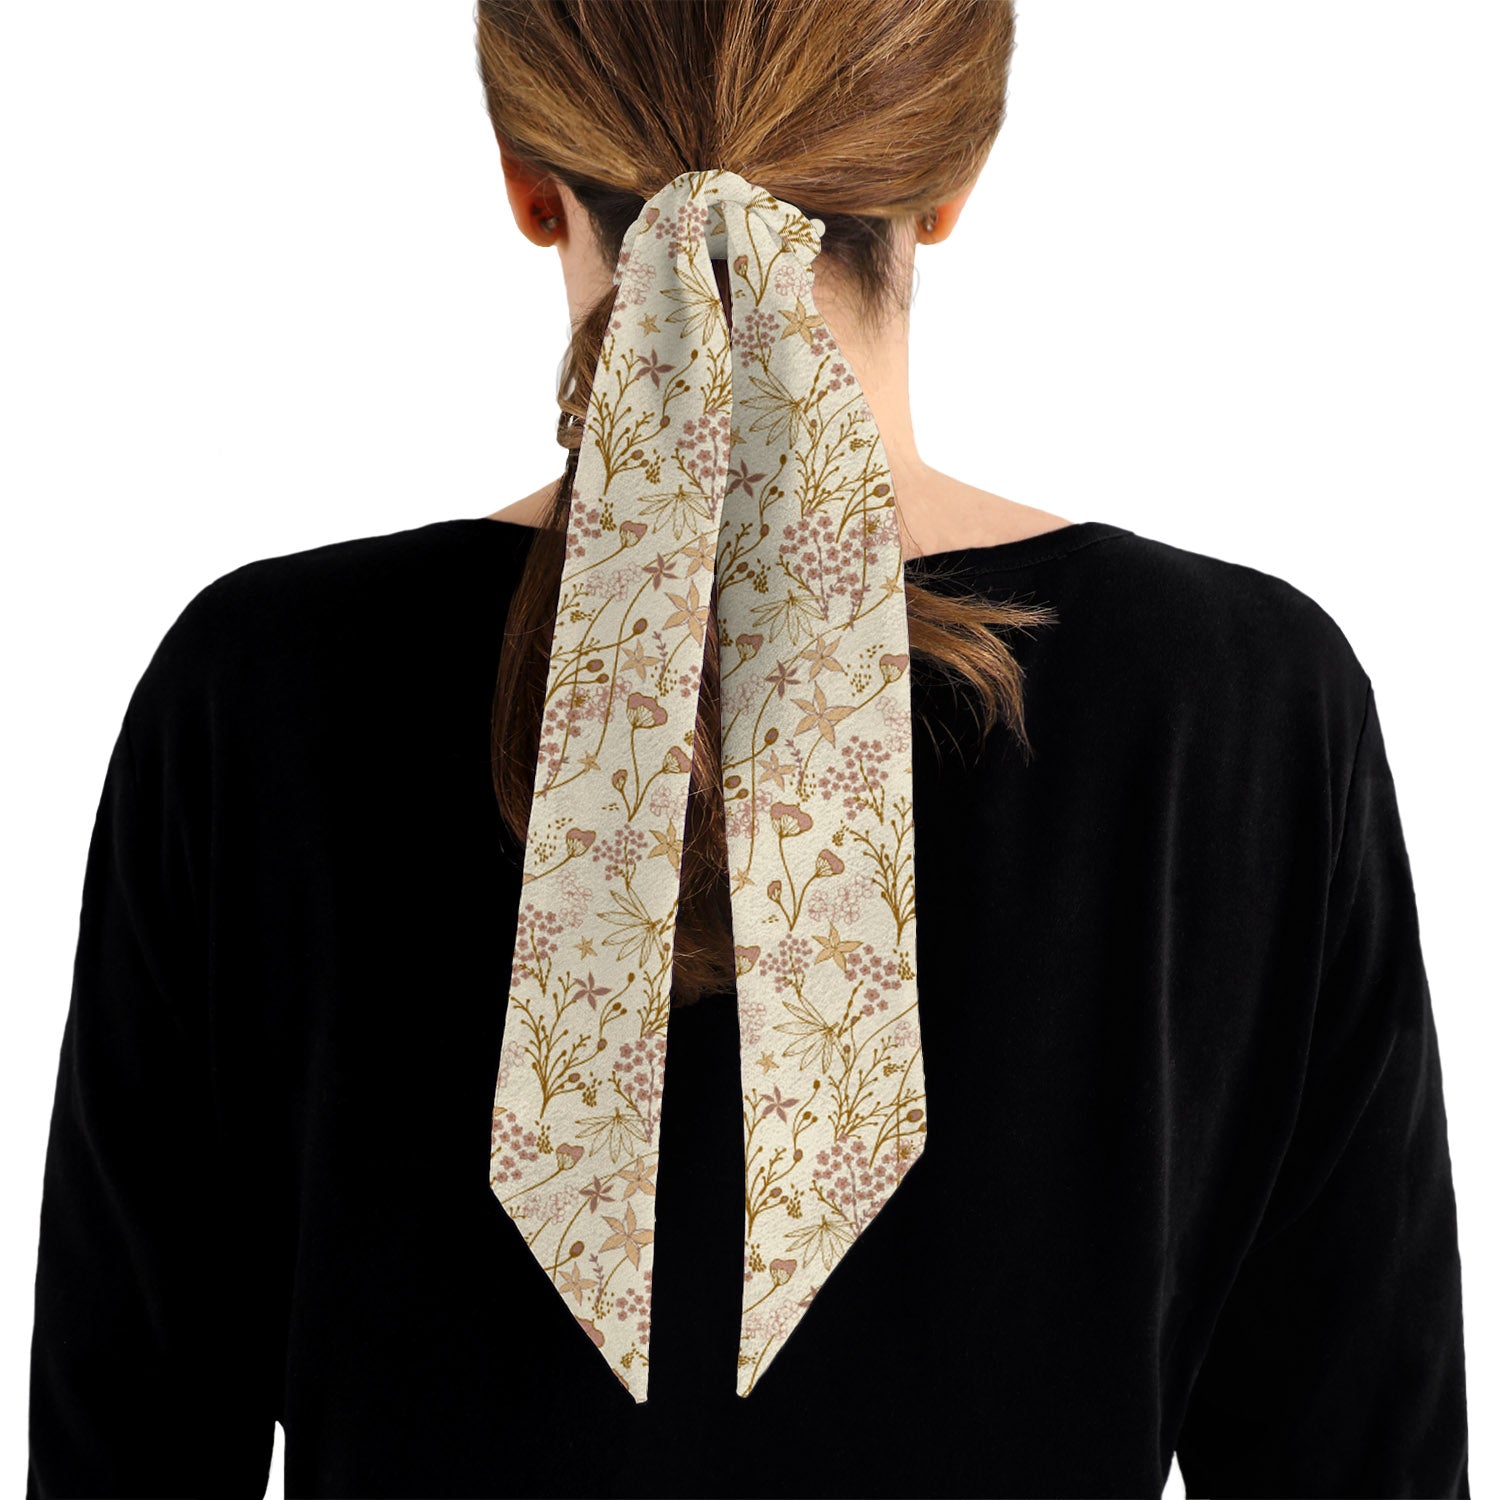 lv head scarf for women